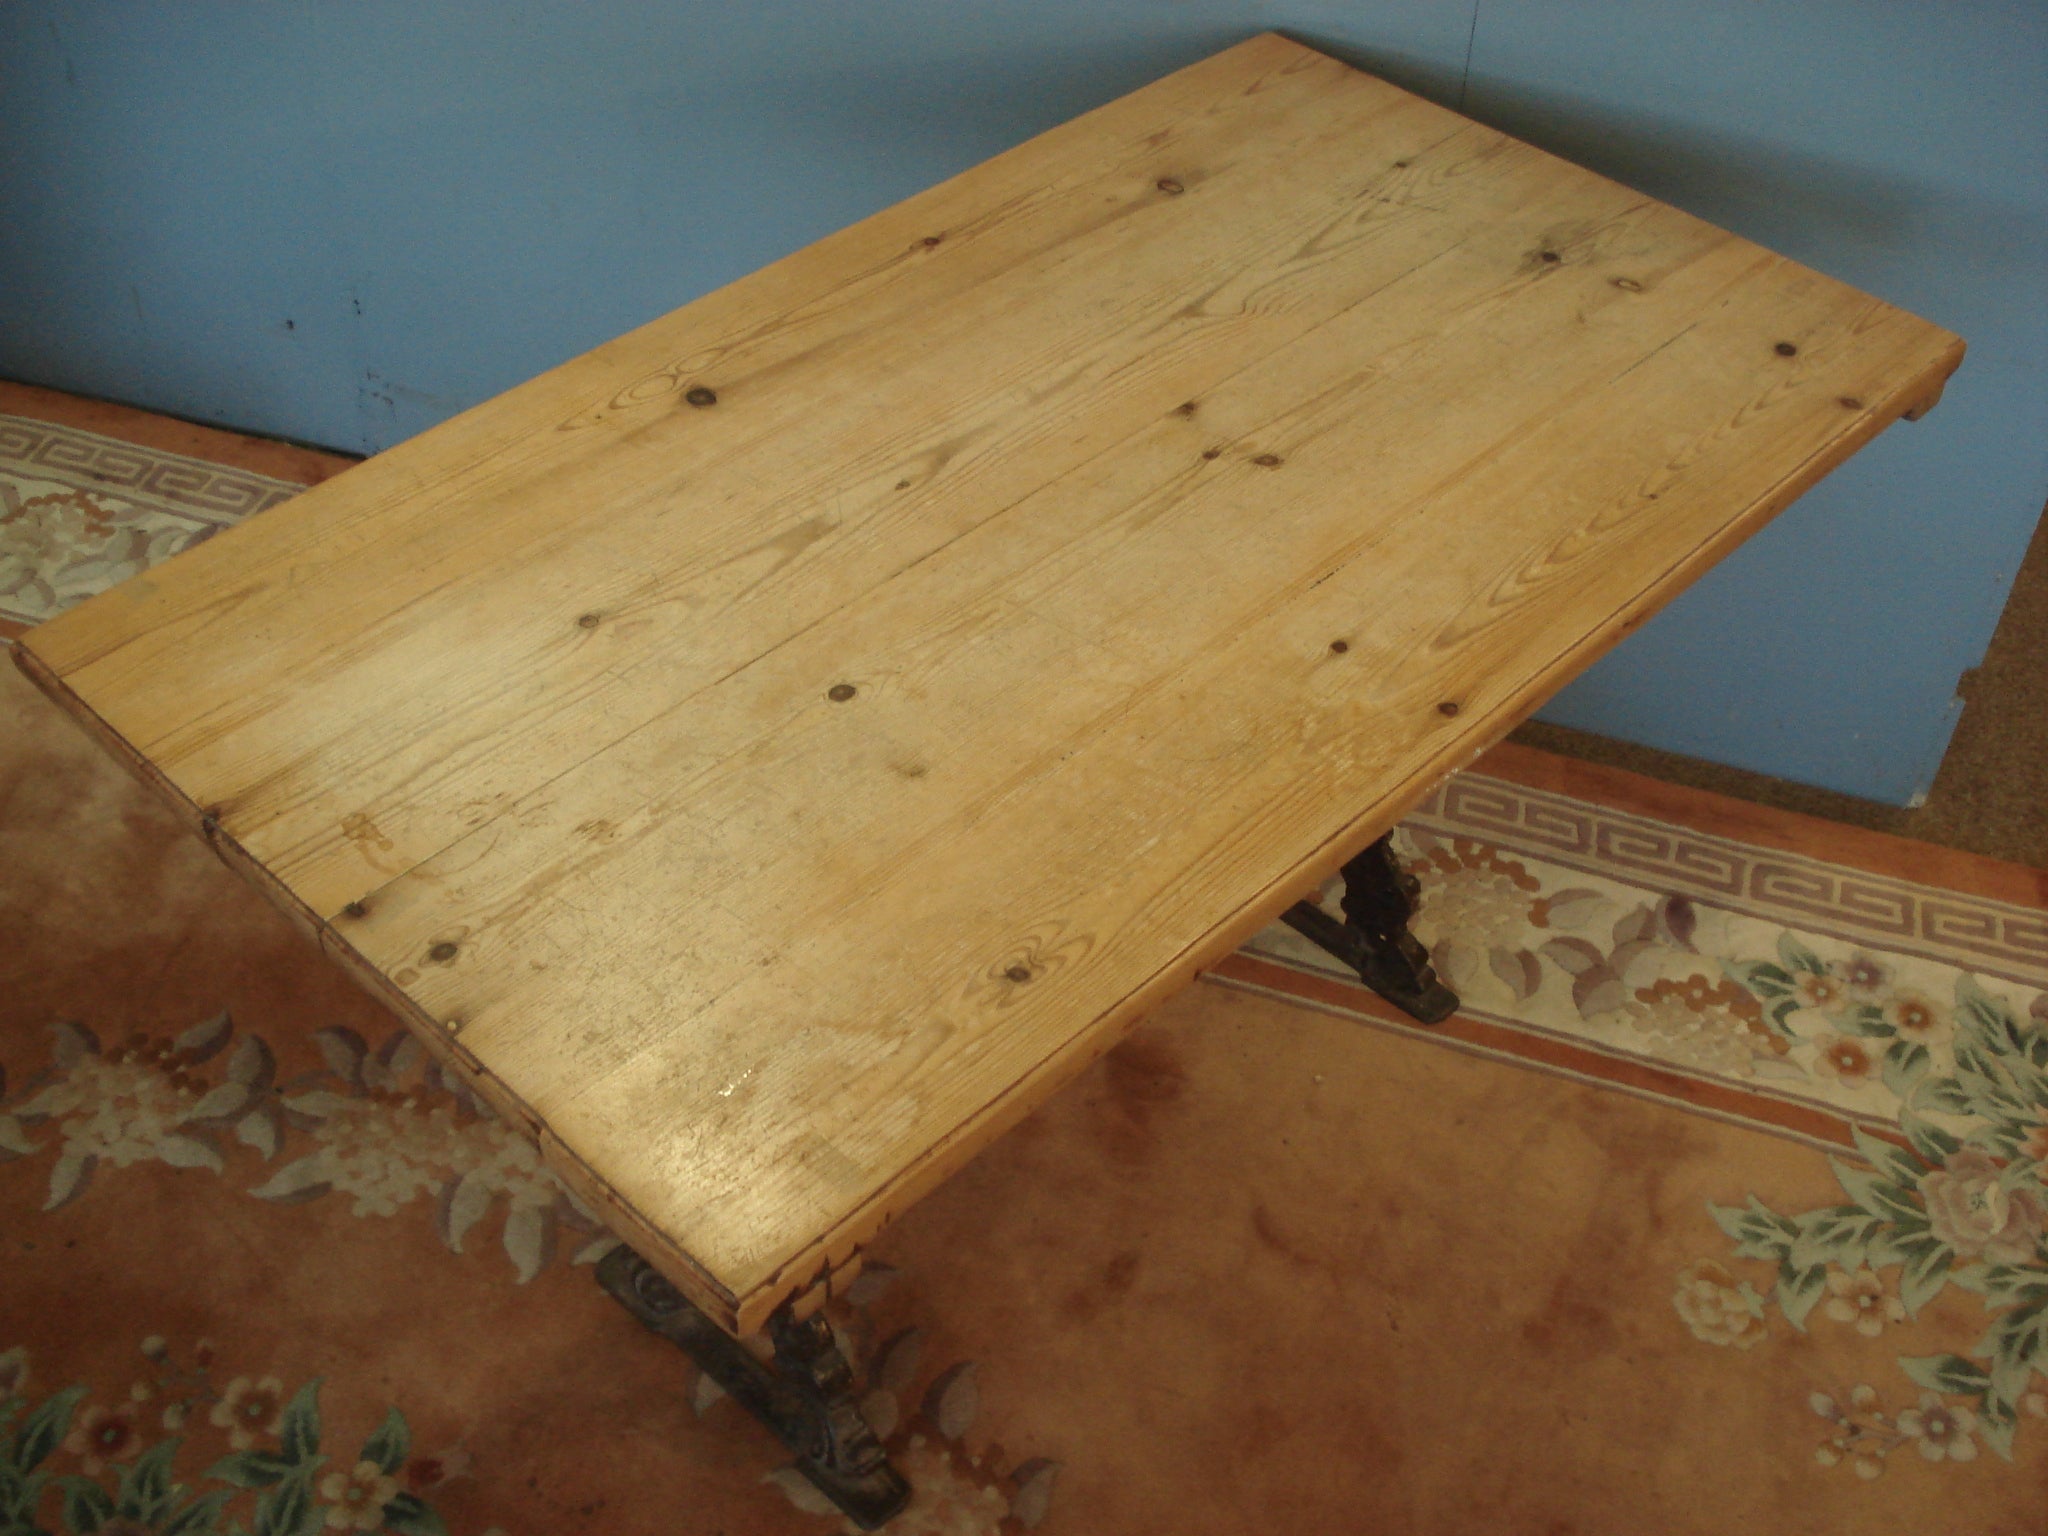 On decorative Cast Iron base. Vintage Pine Table.